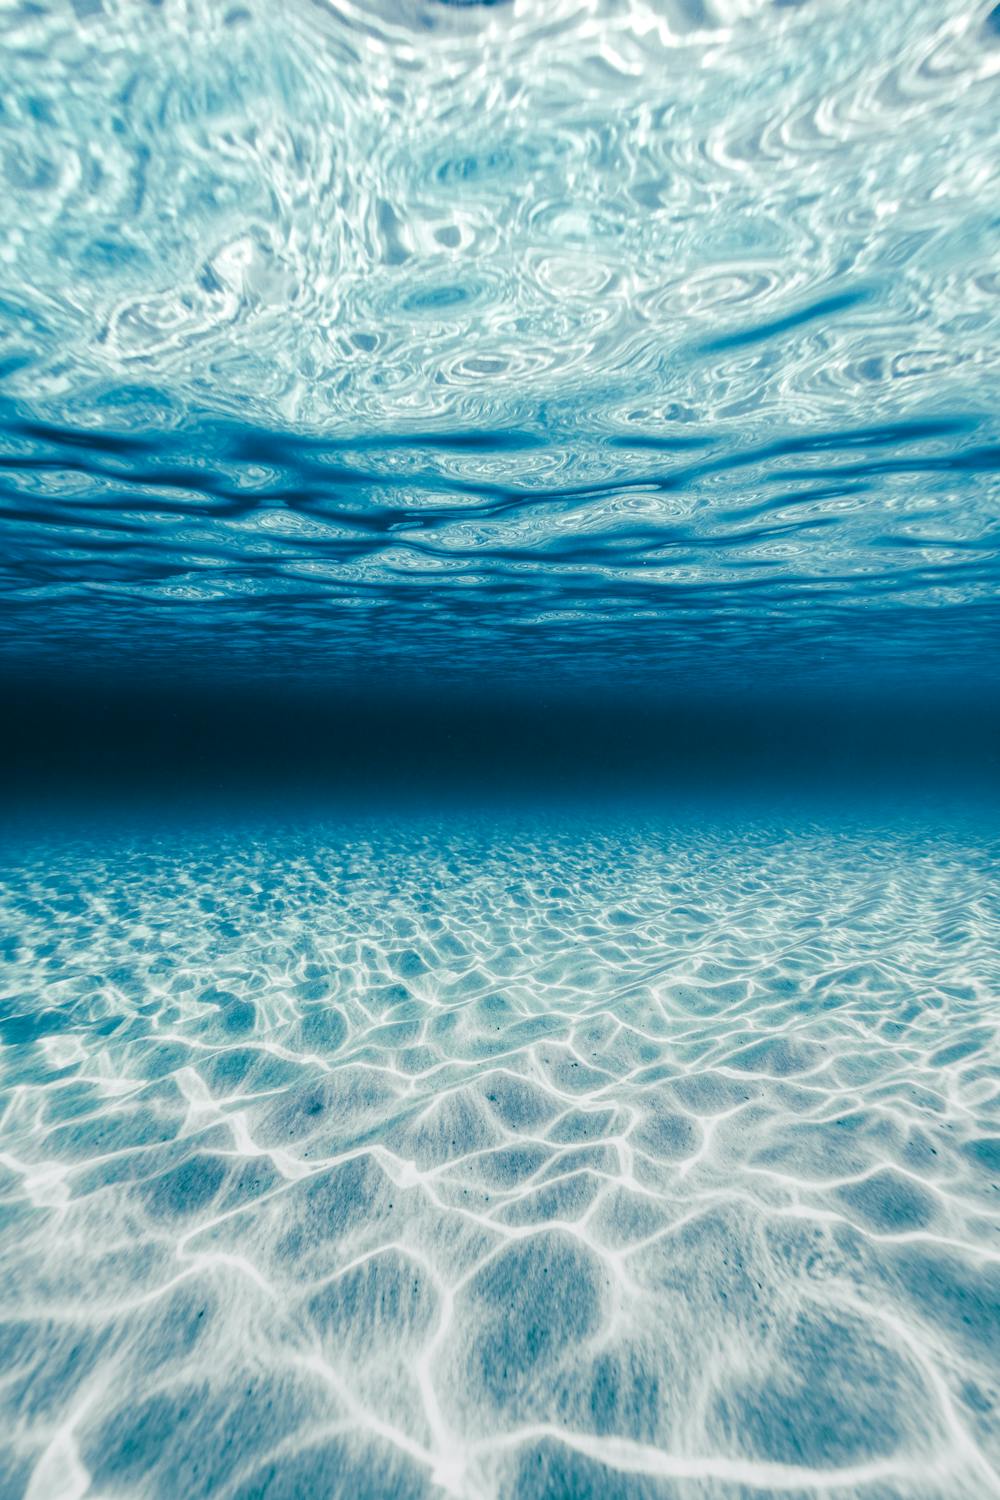 Underwater Landscape · Free Stock Photo